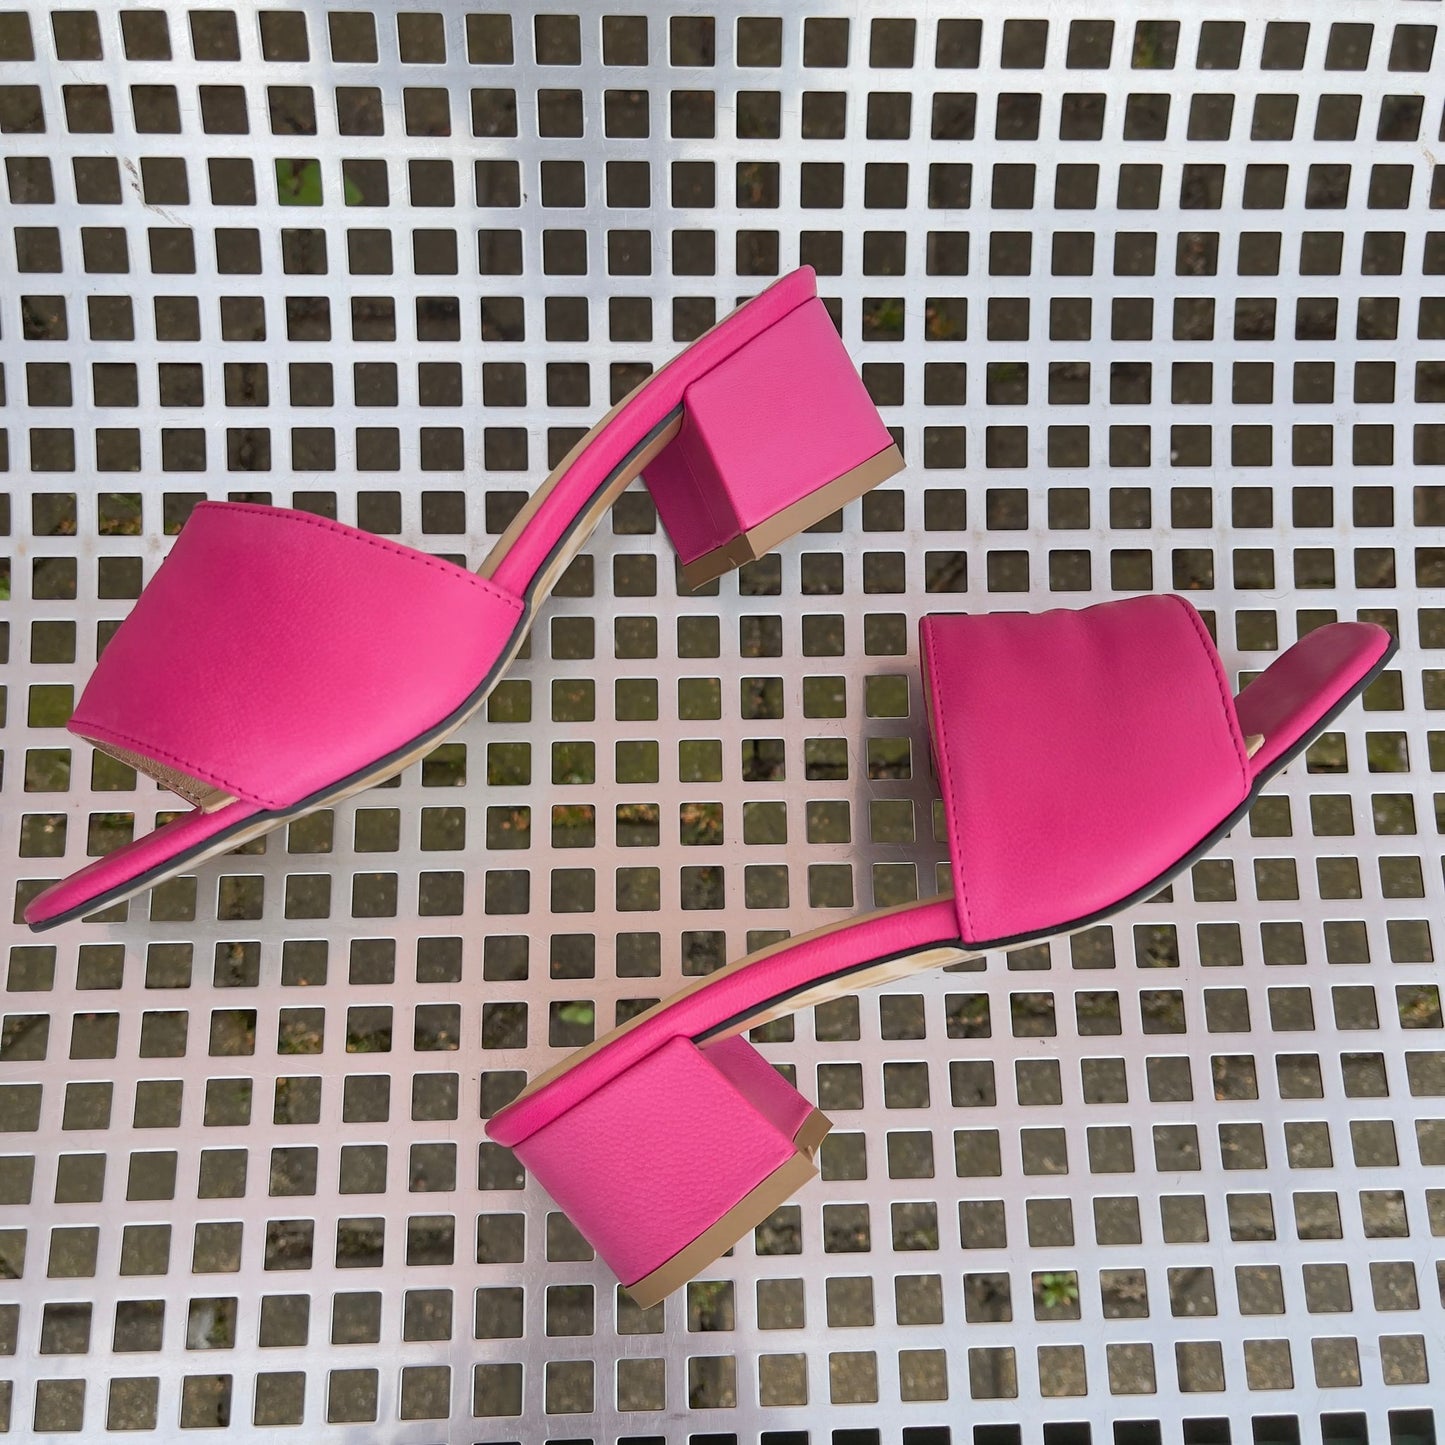 Hot pink leather ladies slider shoes set on a kitten heel